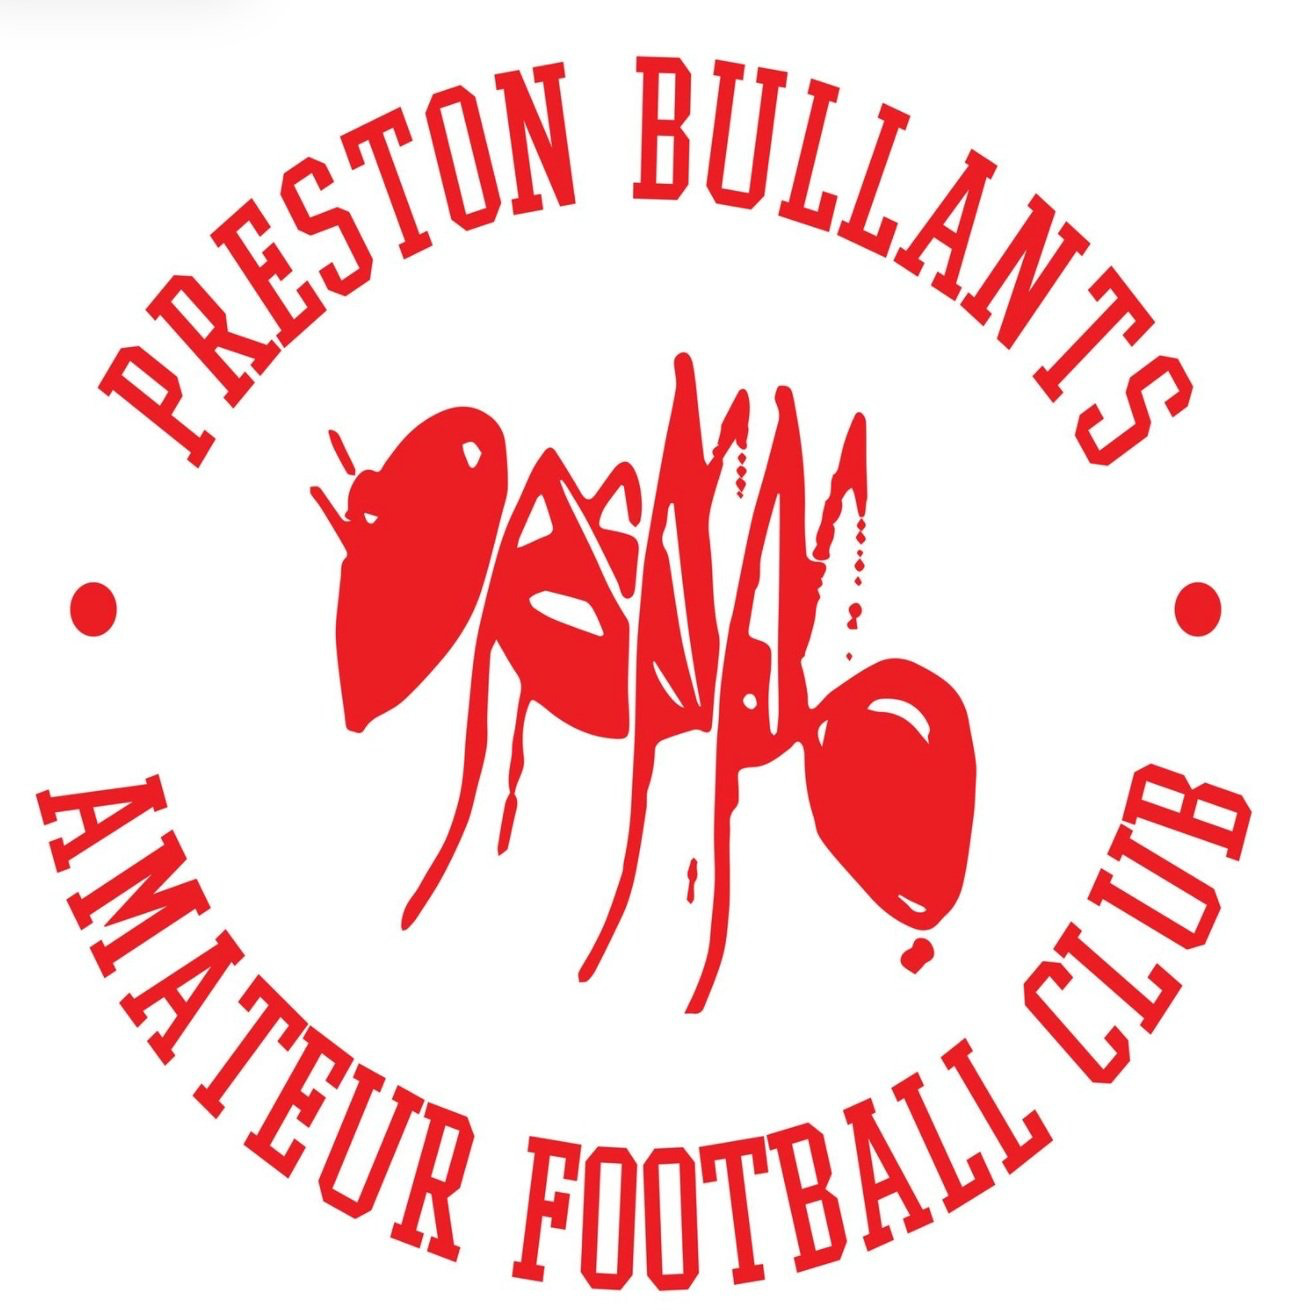 Preston Bullants